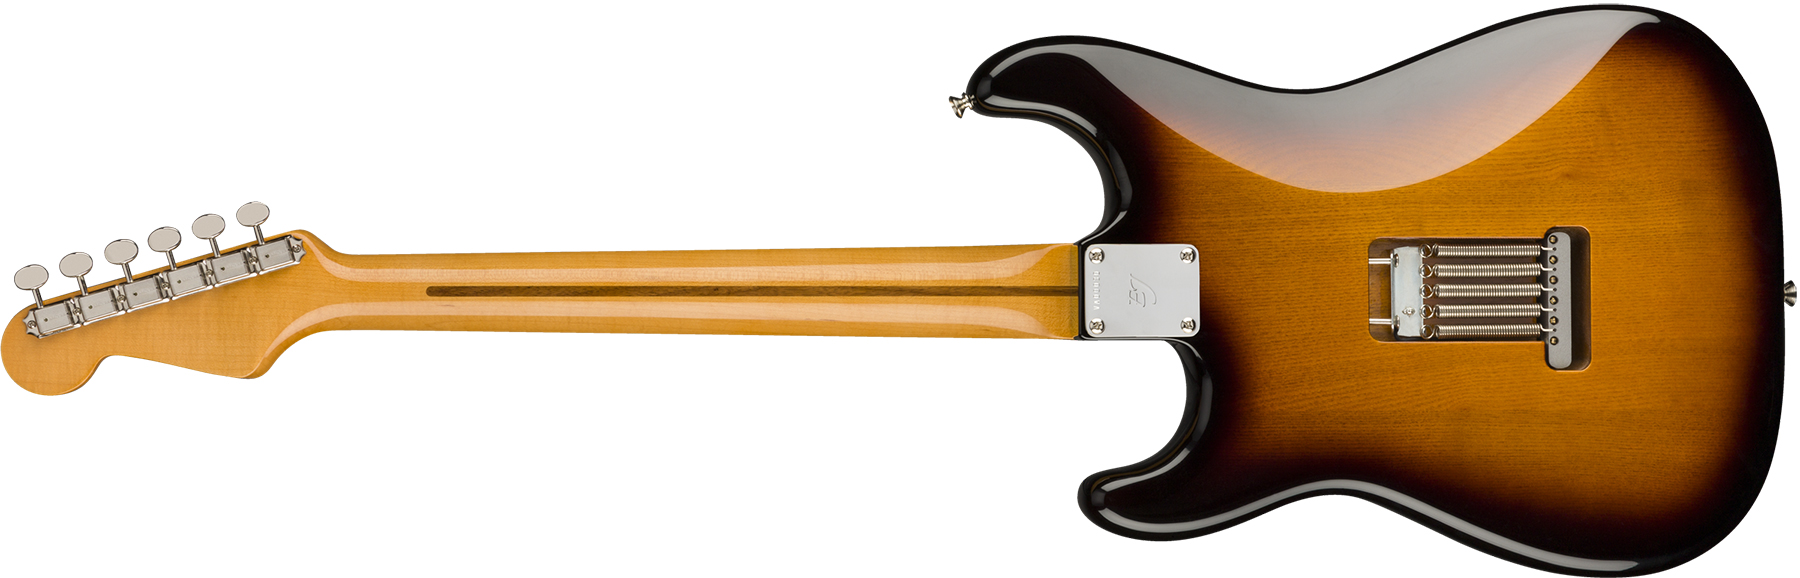 Fender Eric Johnson Strat 1954 Virginia Stories Collection Usa Signature Mn - 2-color Sunburst - Guitarra eléctrica con forma de str. - Variation 1